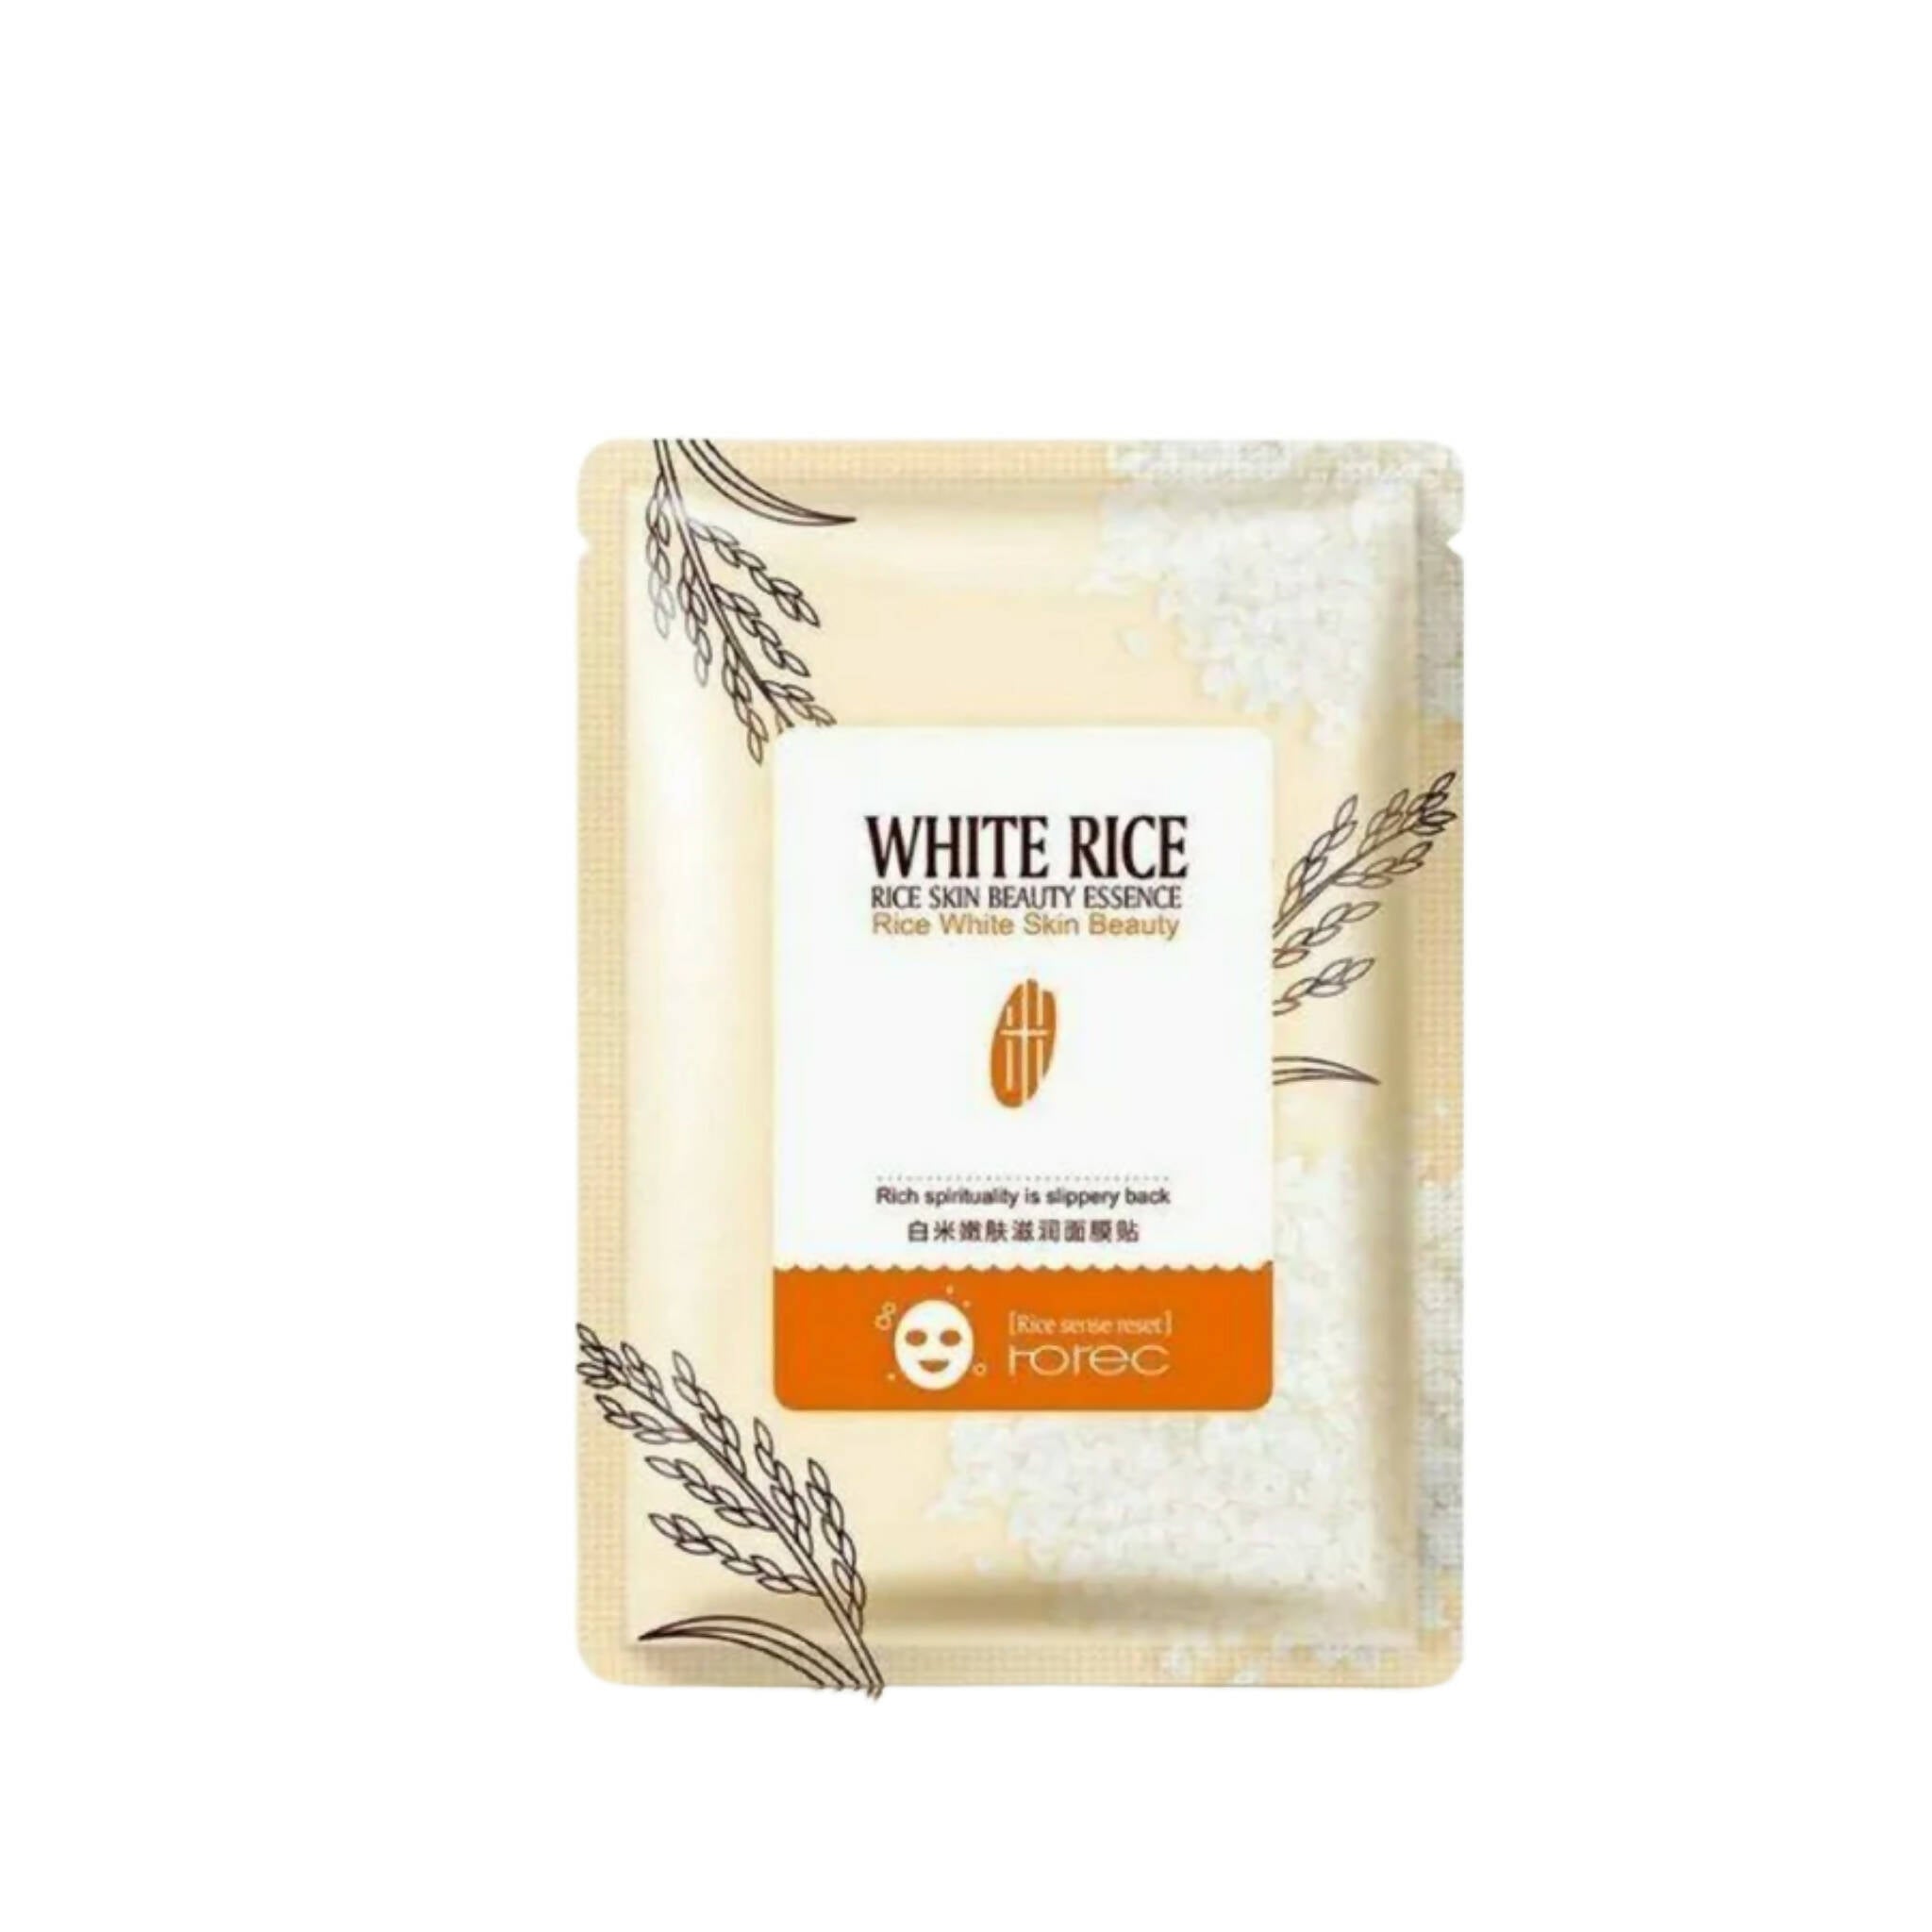 White Rice Face Sheet Mask, Keeps Skin Smooth & Soft